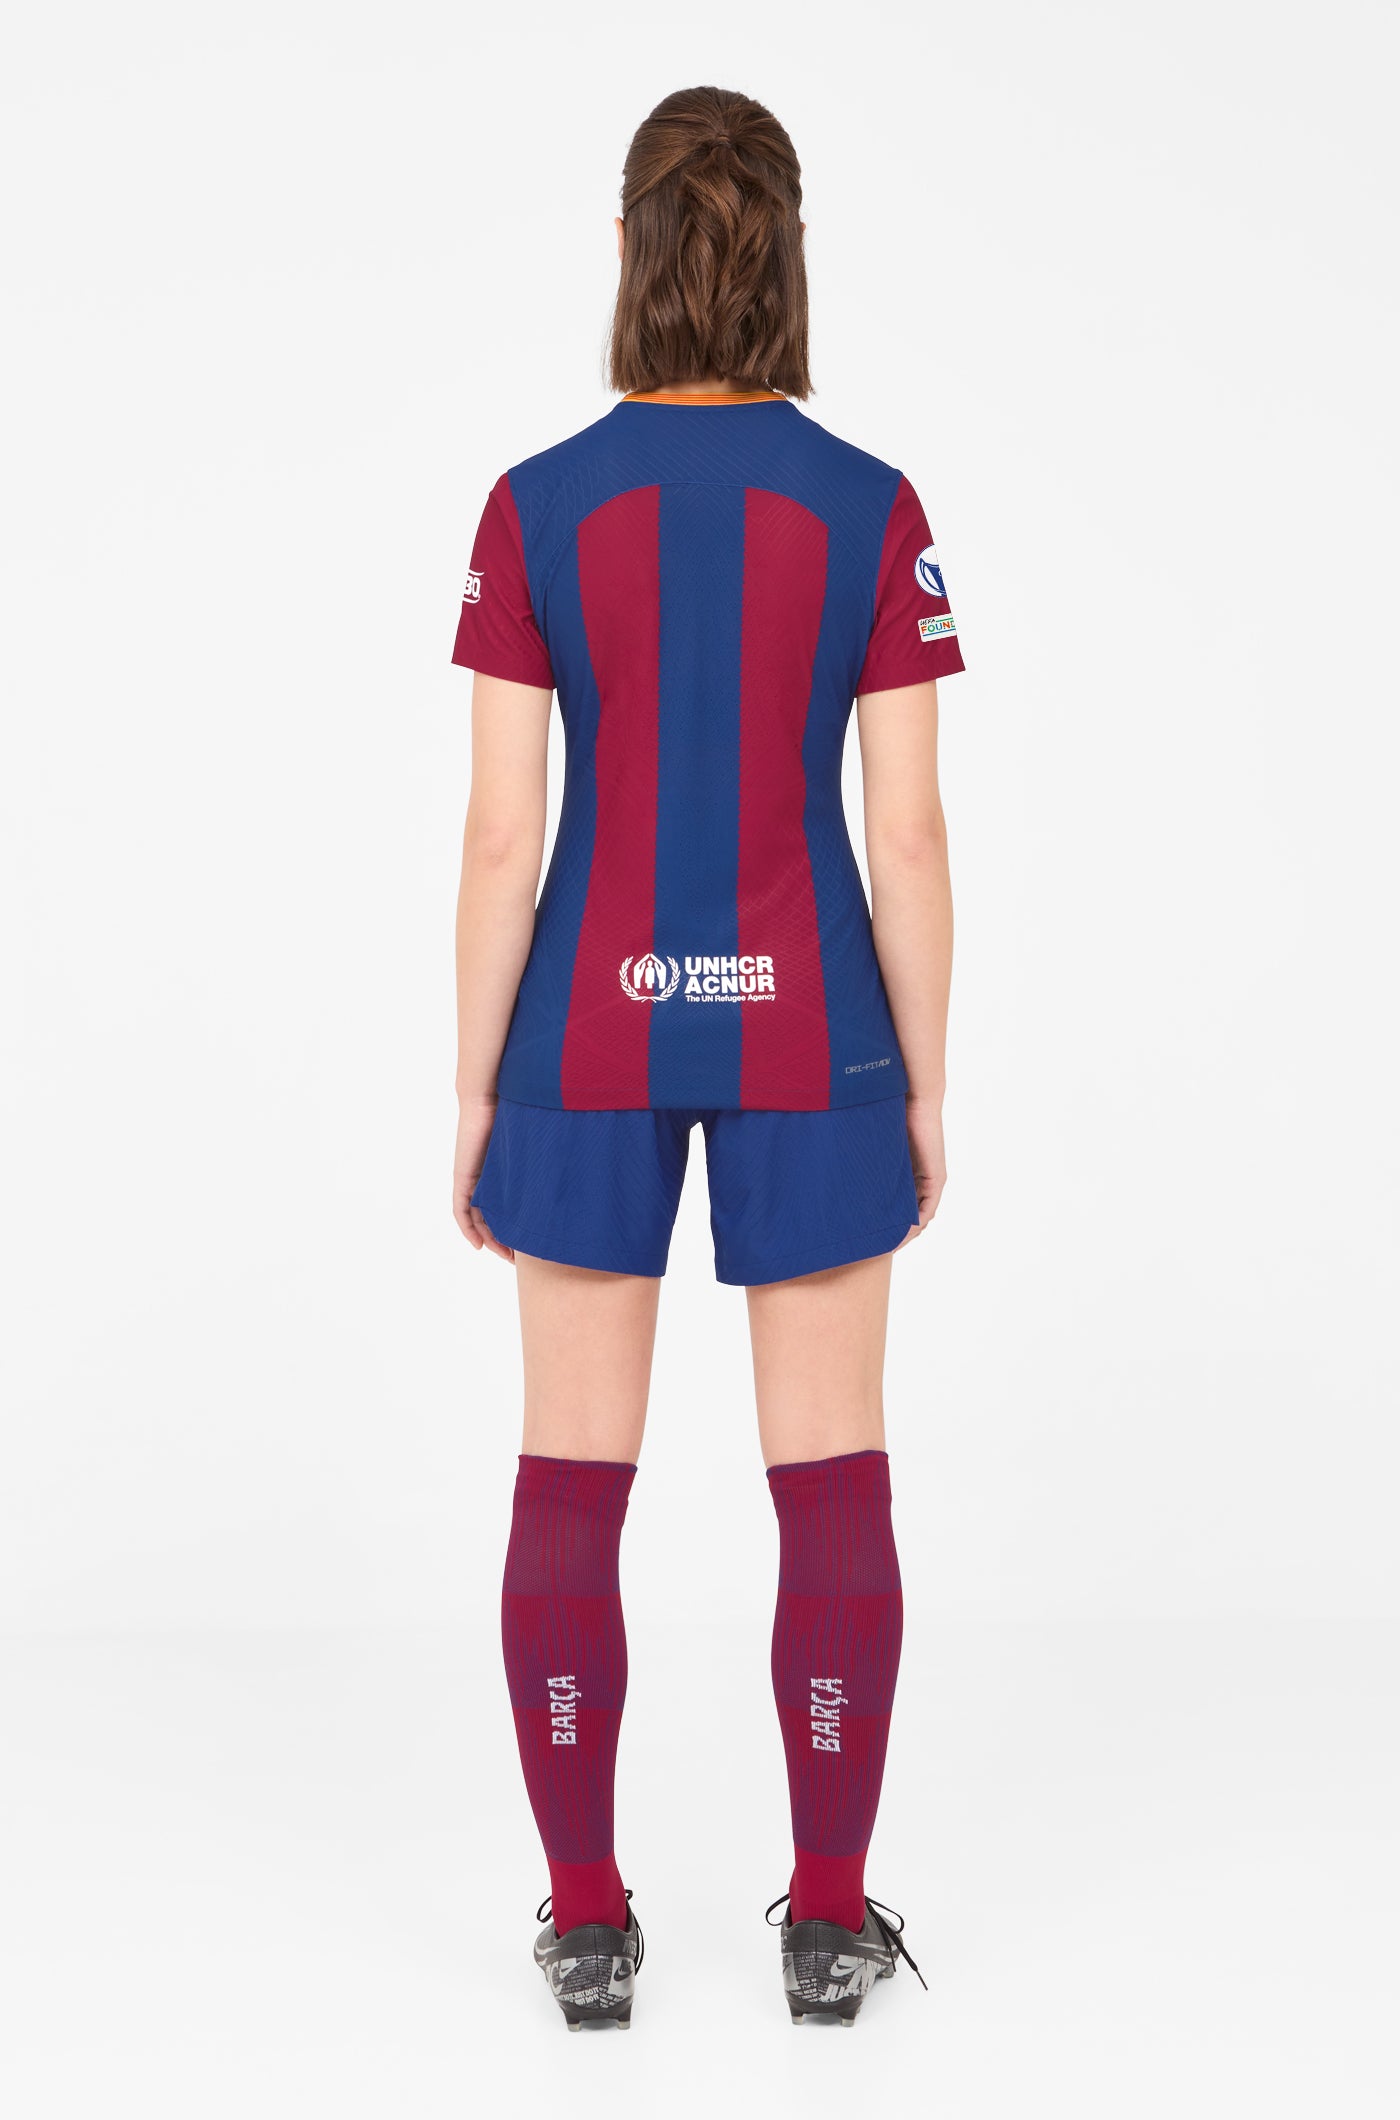 UWCL FC Barcelona Home Shirt 23/24 Player's Edition - Women